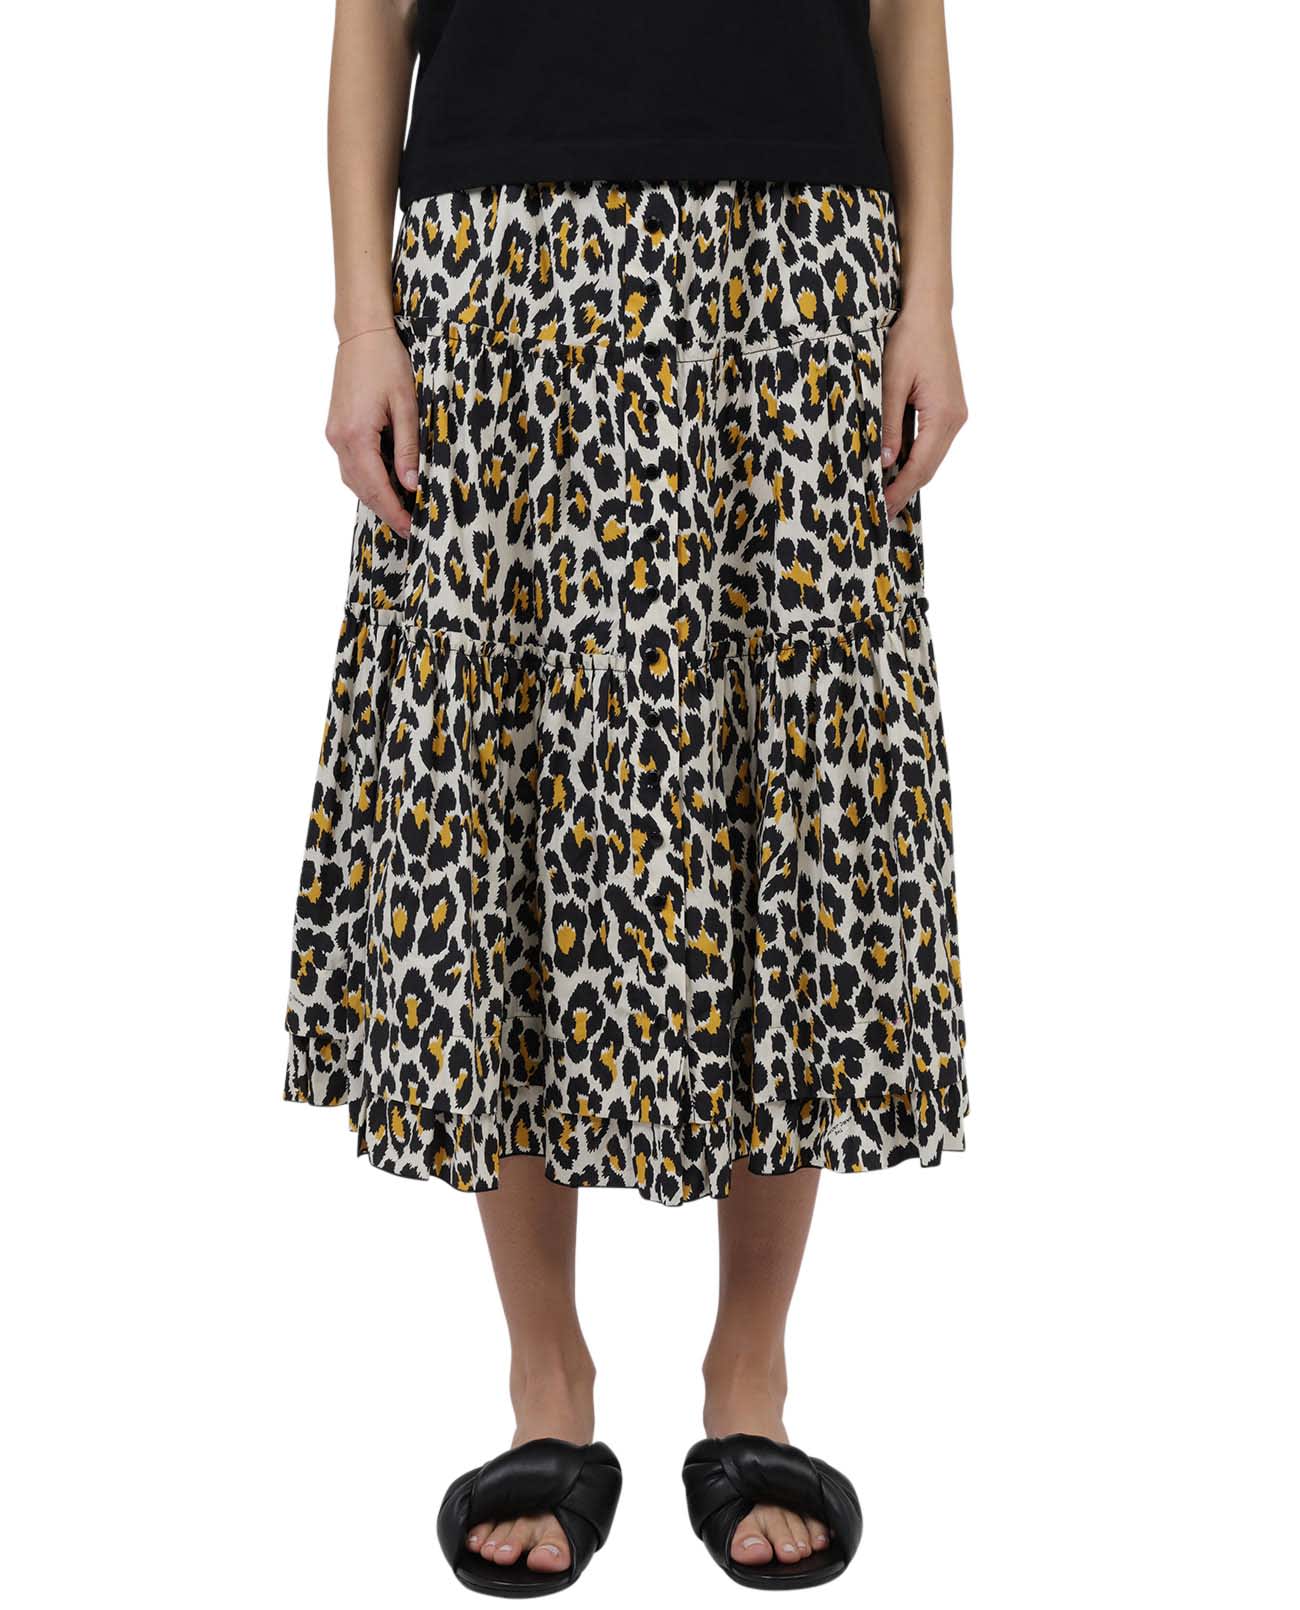 The Marc Jacobs Leopard Prairie Skirt